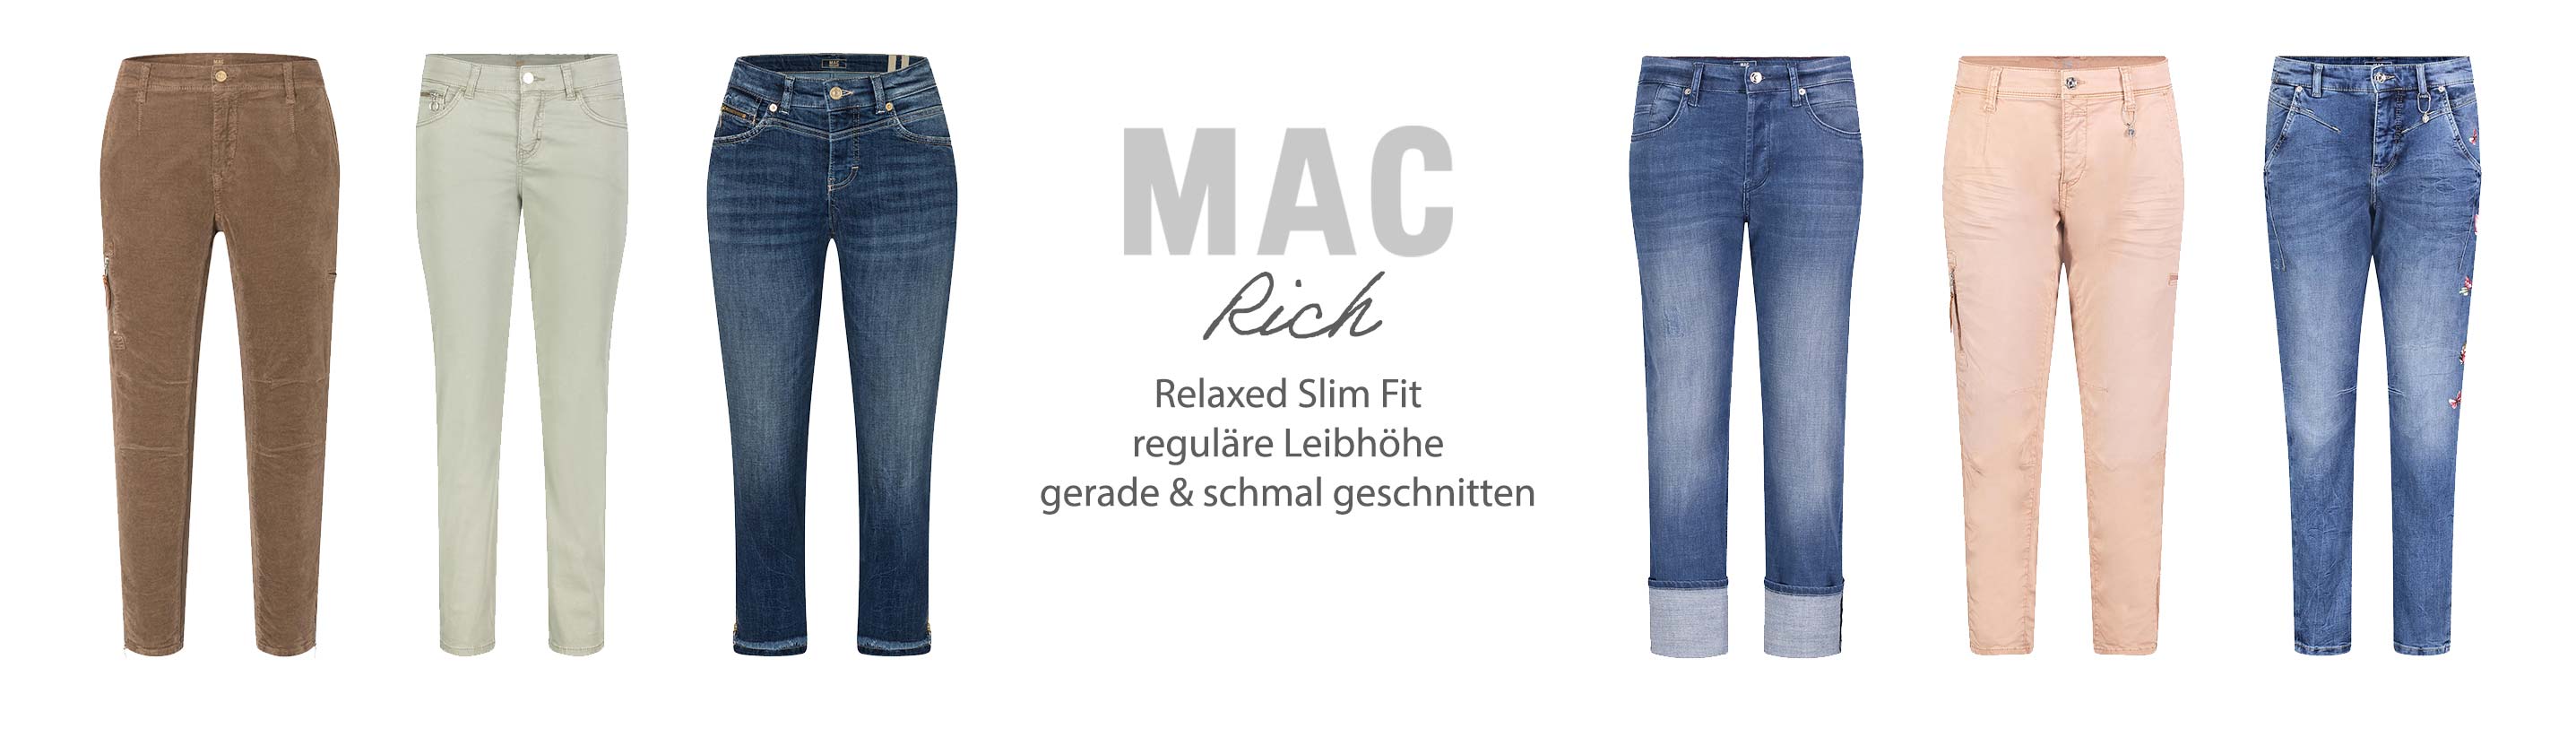 MAC Jeans Rich